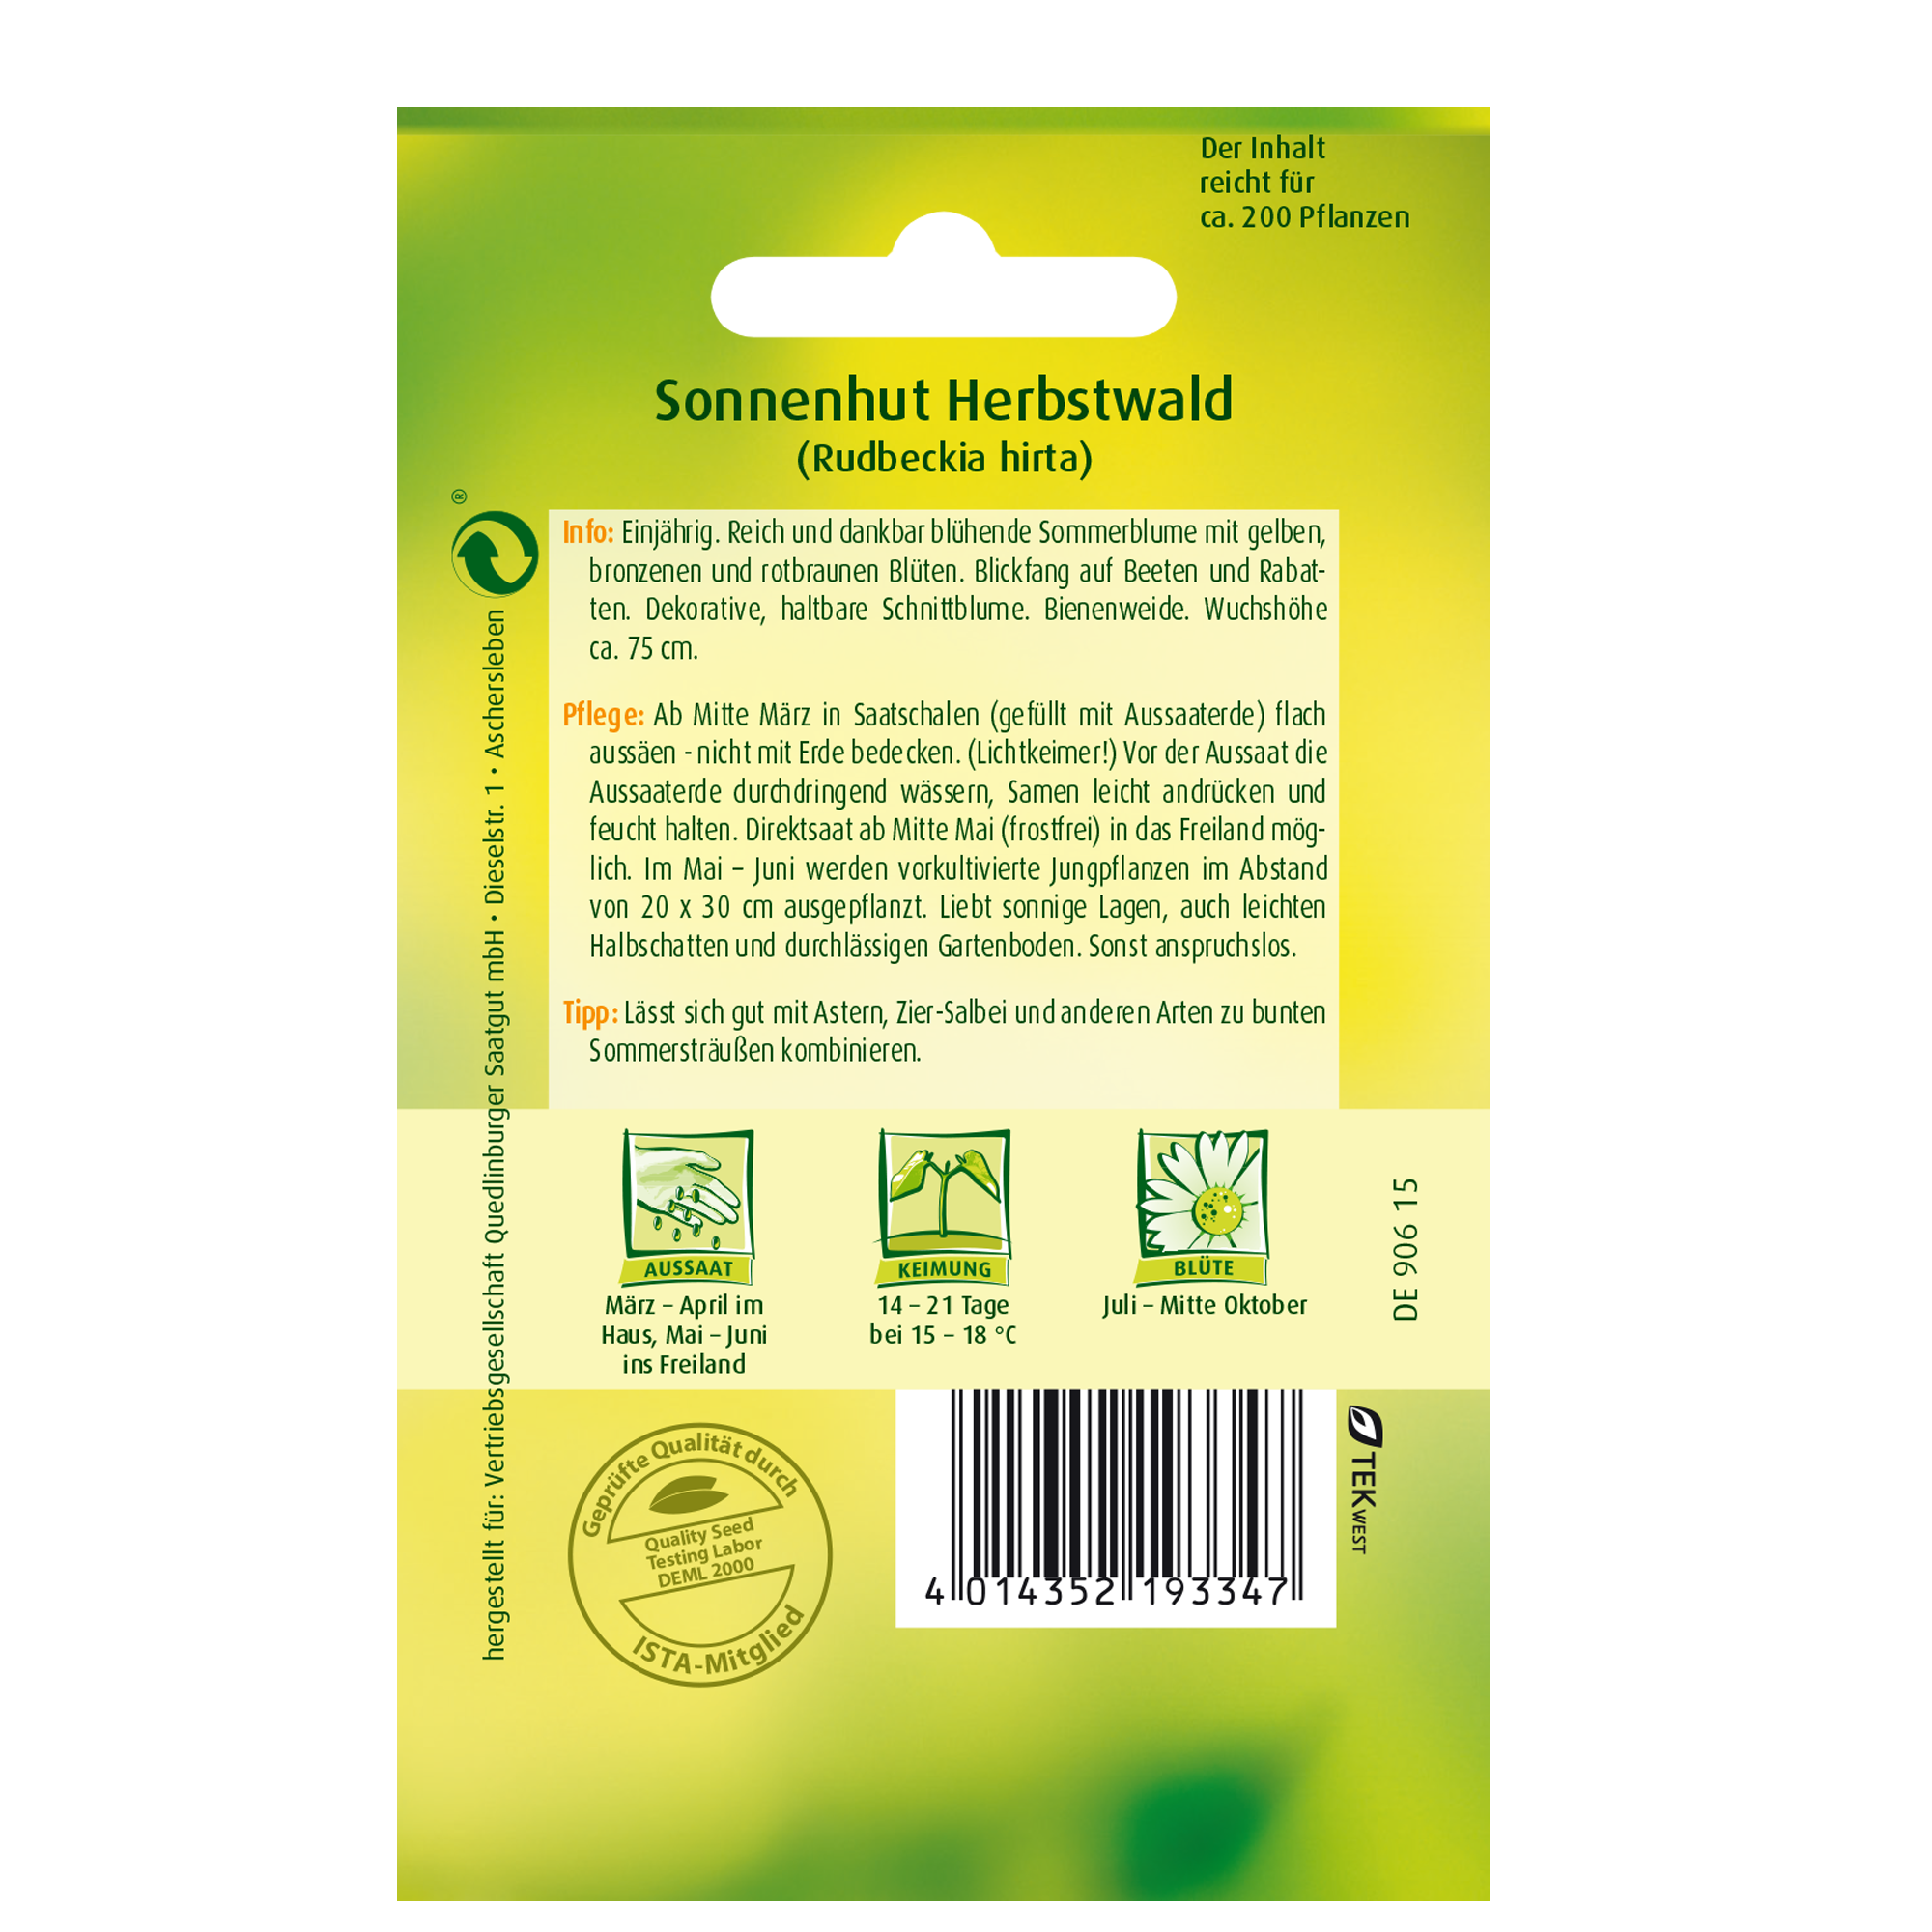 Sonnenhut 'Herbstwald' + product picture